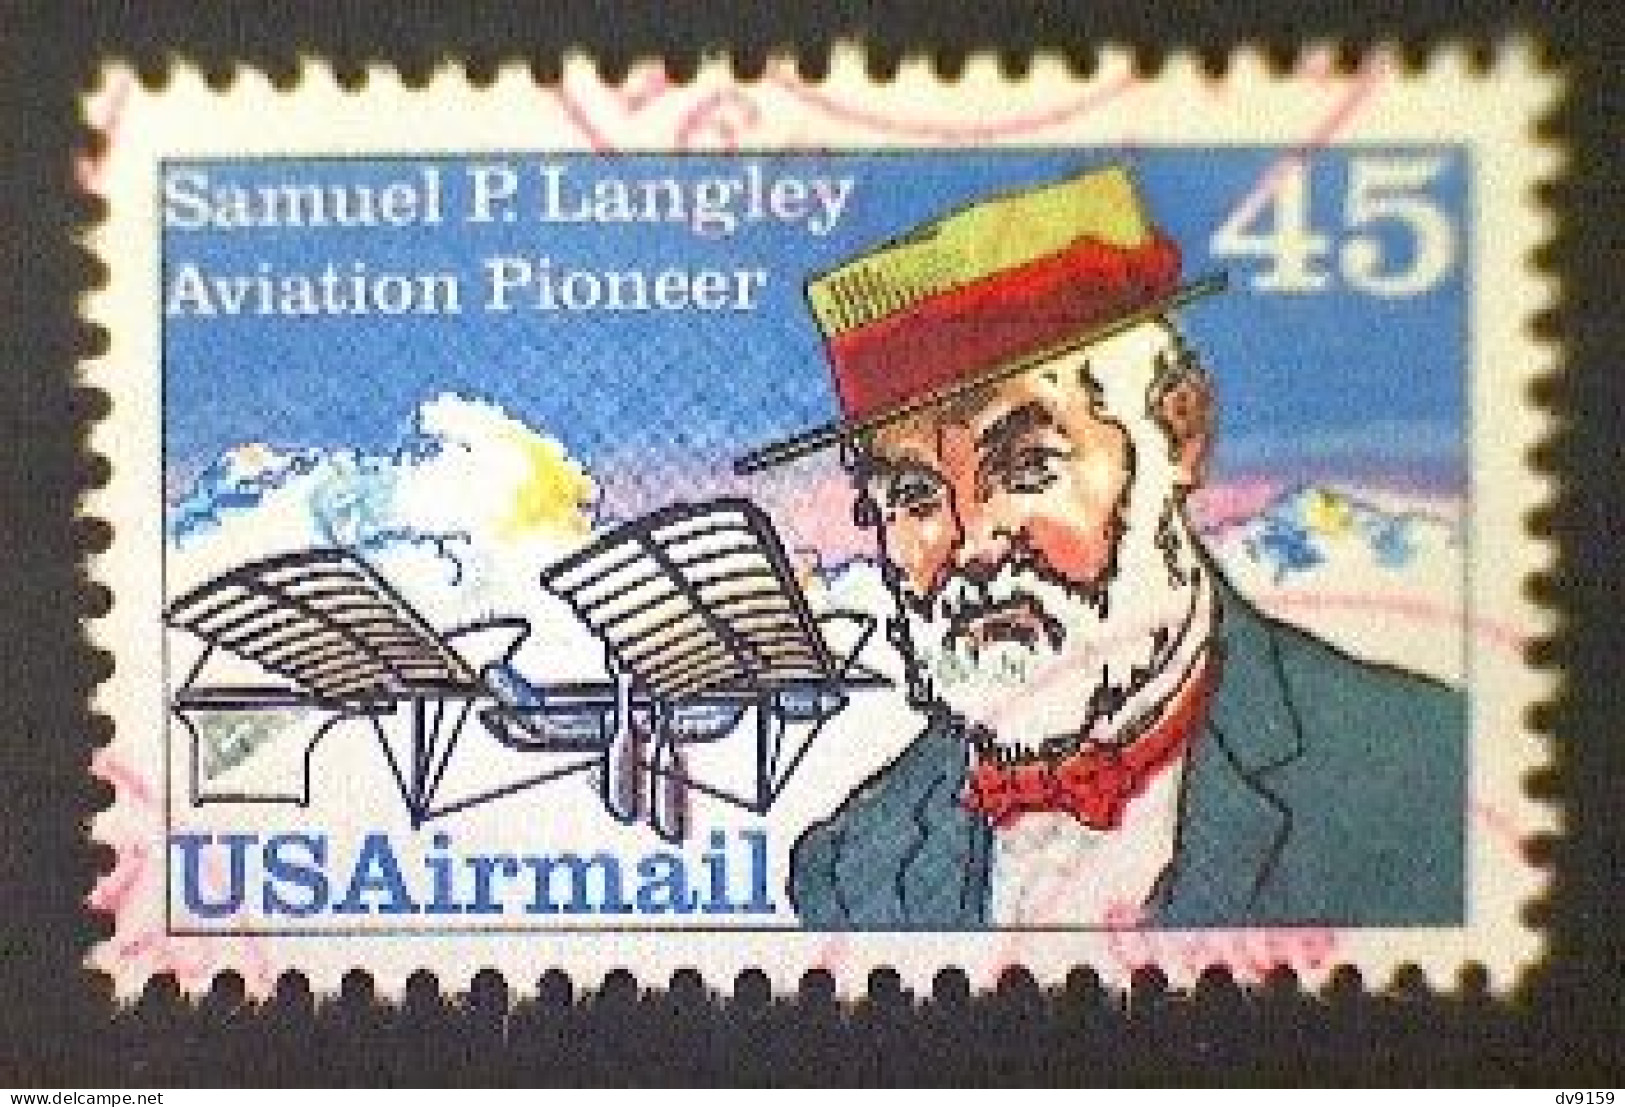 United States, Scott #C118, Used(o) Airmail, 1988, Langley And His Aerodrome, 45¢, Multicolored - 3a. 1961-… Usati